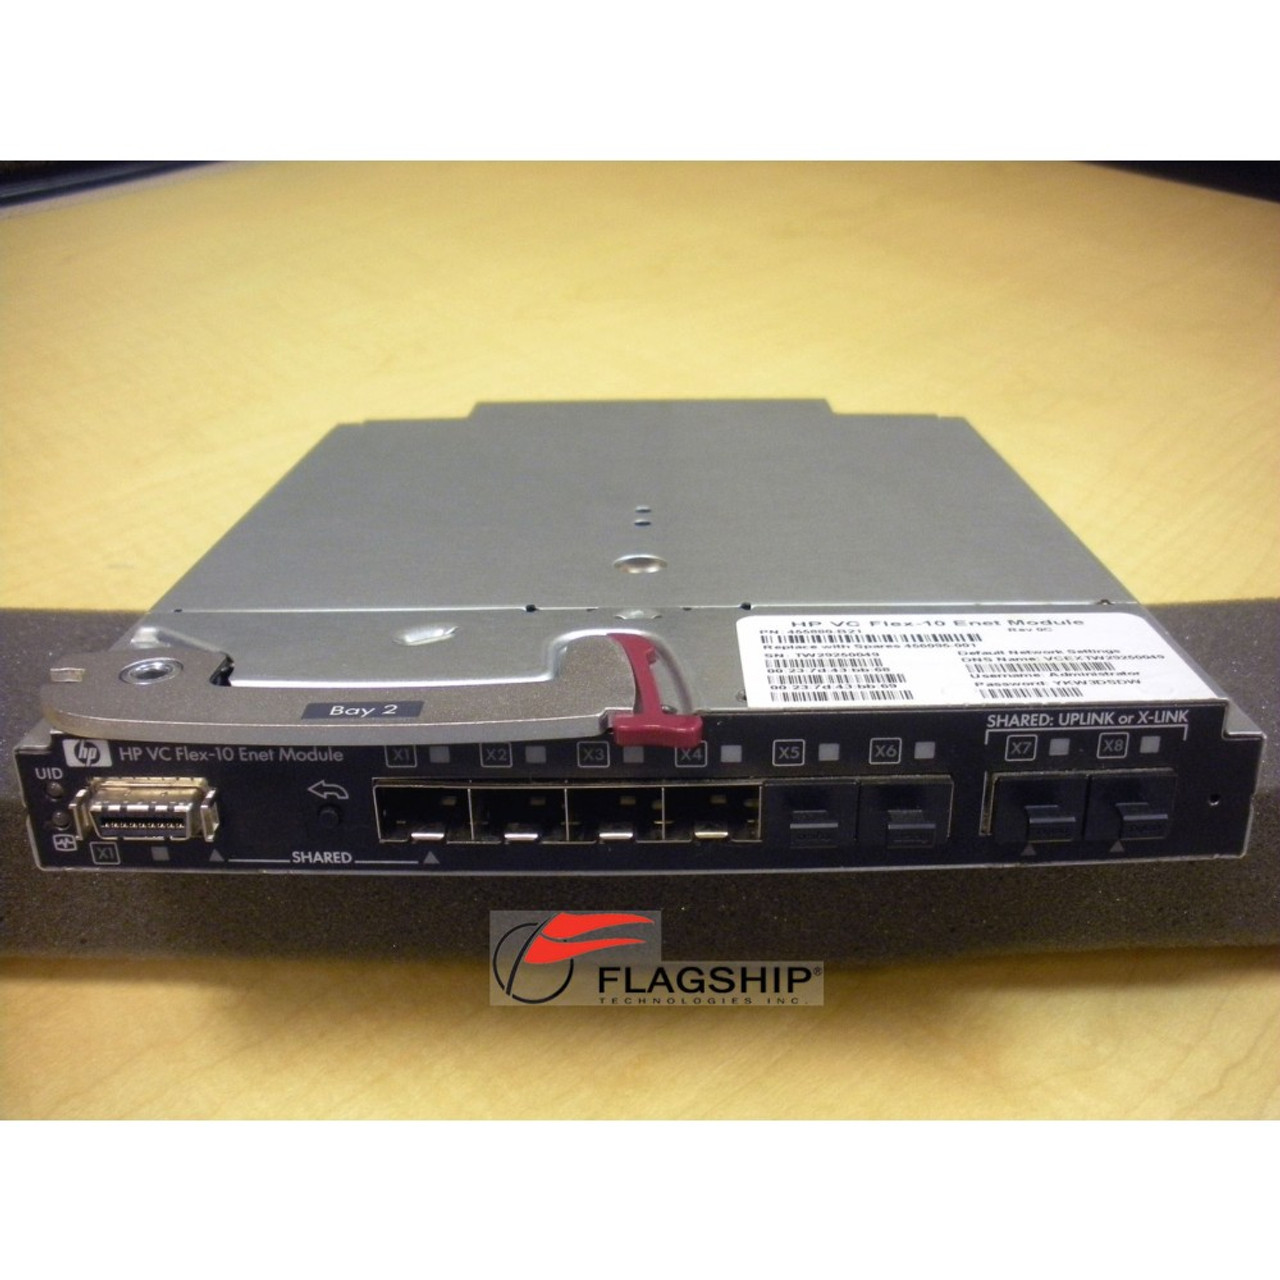 708052-001  HP Virtual Connect Flex-10 10GB Ethernet Module for C-class  Bladesystem